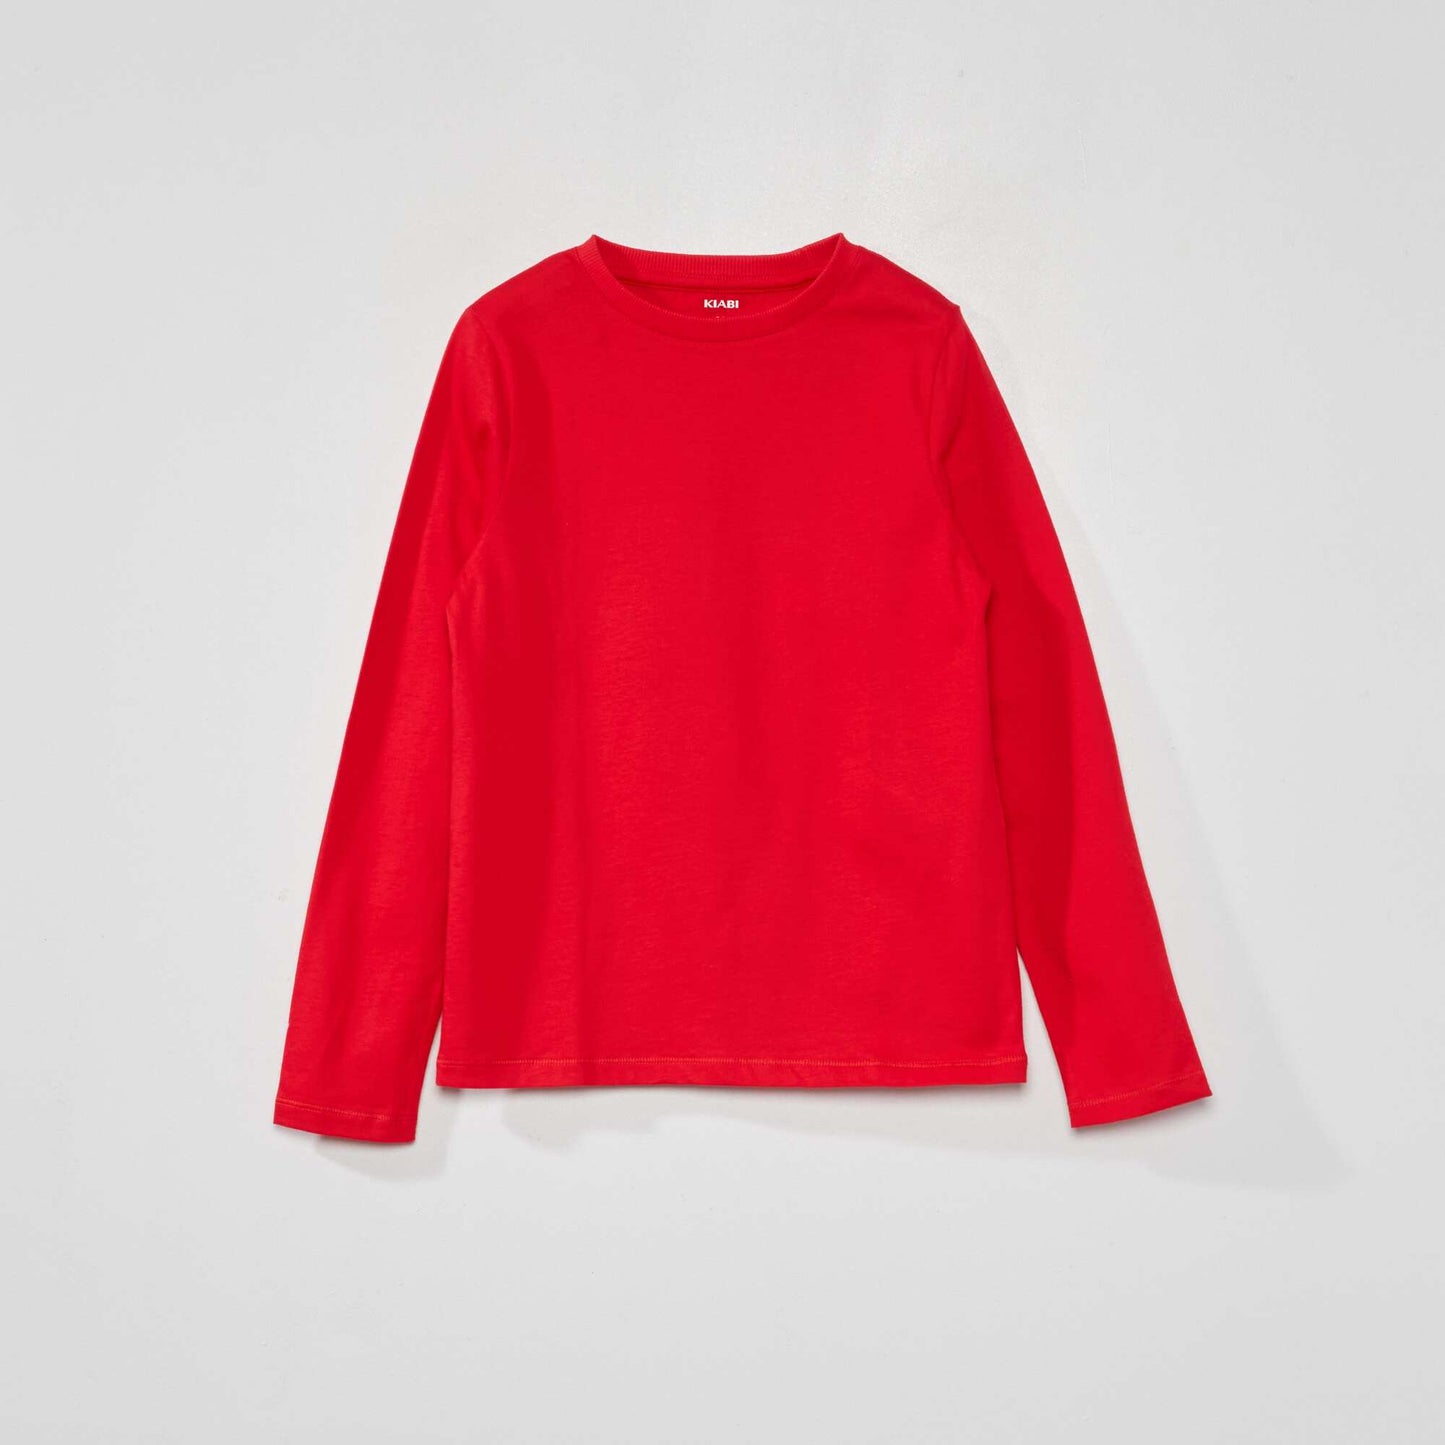 Plain long-sleeved T-shirt bright red